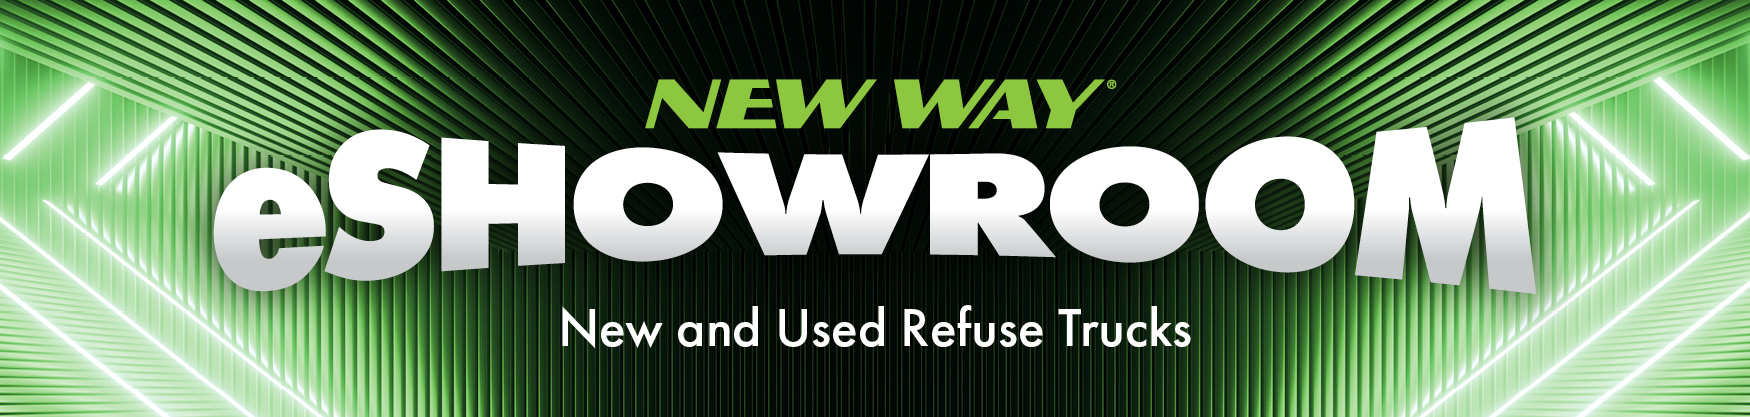 New Way eShowroom Has Listing of Work-Ready Refuse Trucks for Sale